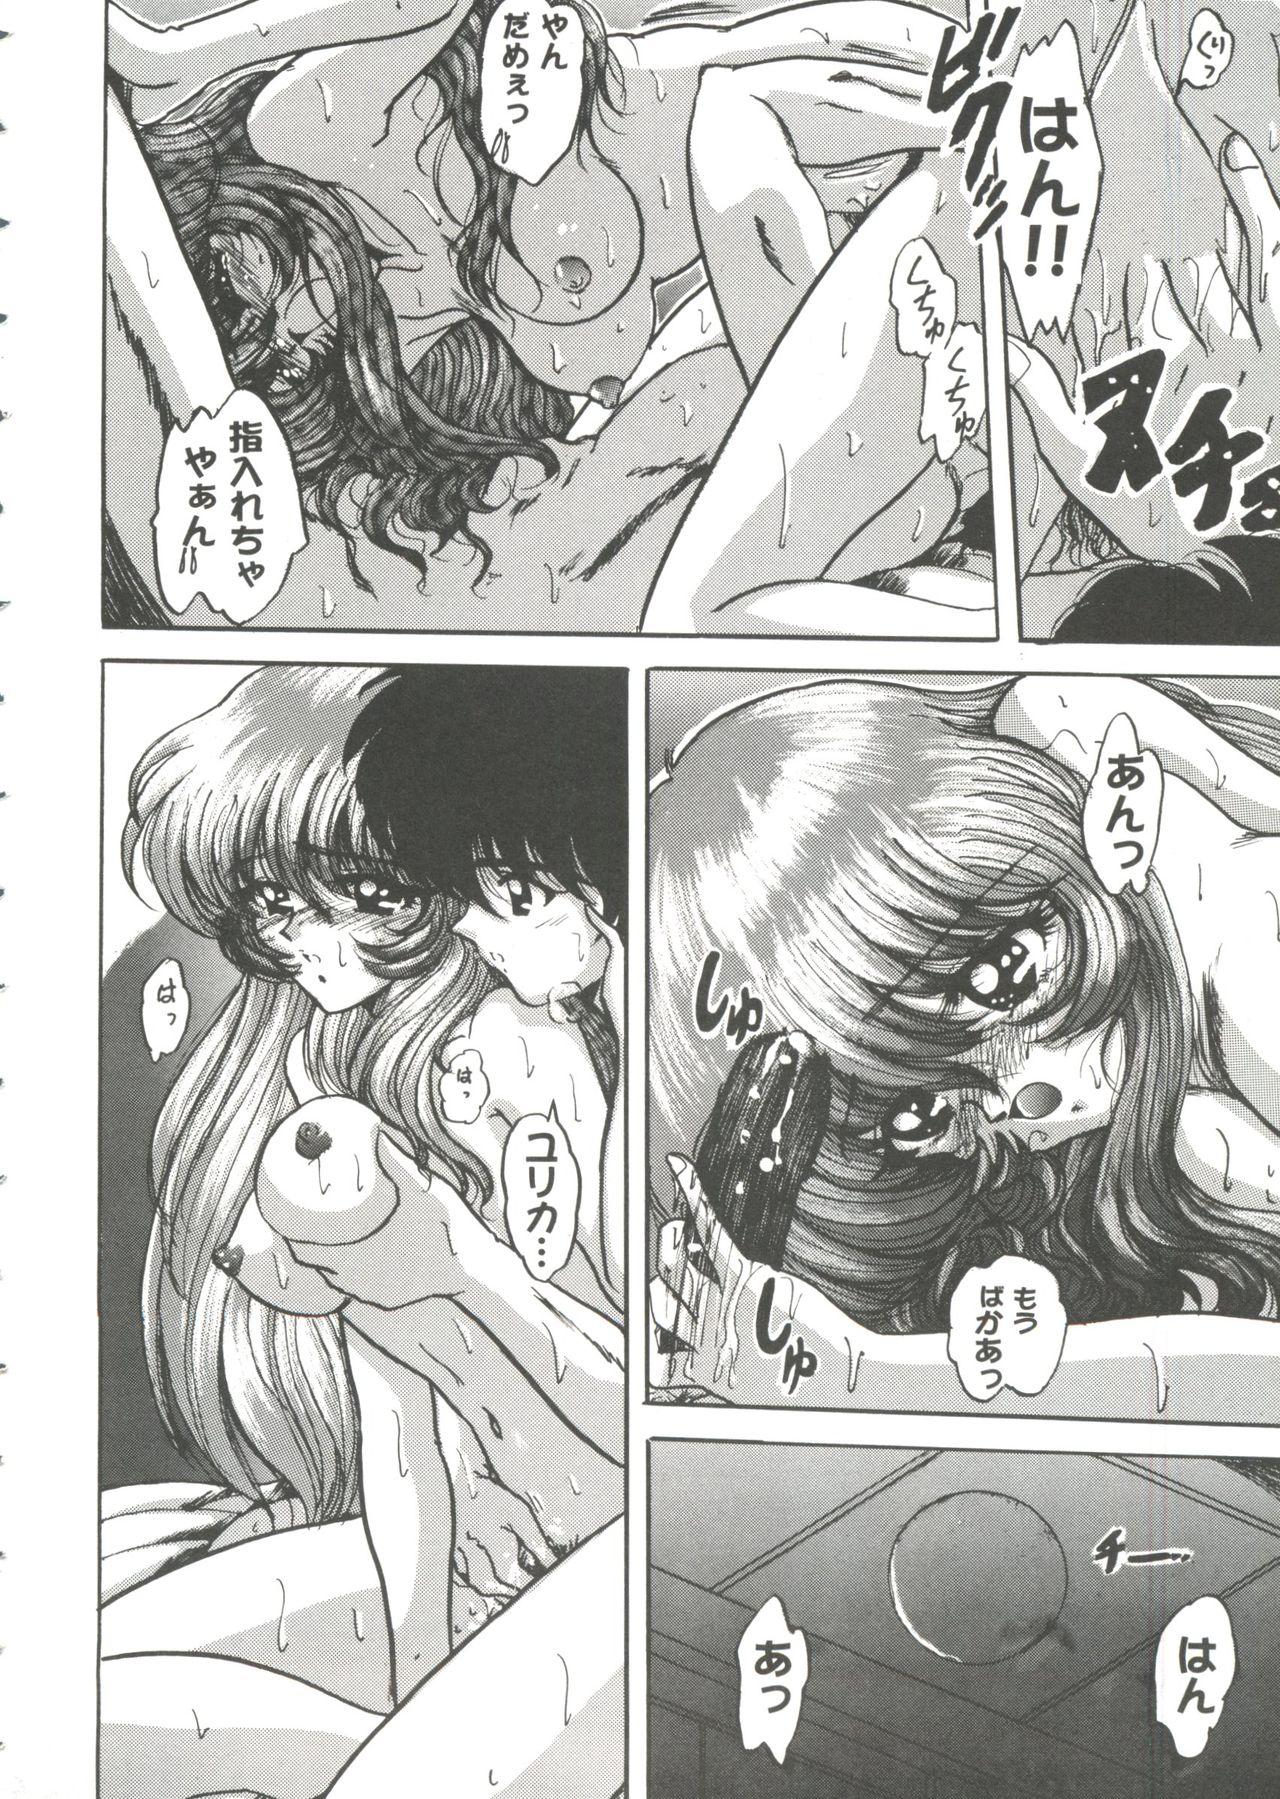 Lesbian Sex Girl's Parade 99 Cut 7 - Sakura taisen Martian successor nadesico Rurouni kenshin White album Thong - Page 8